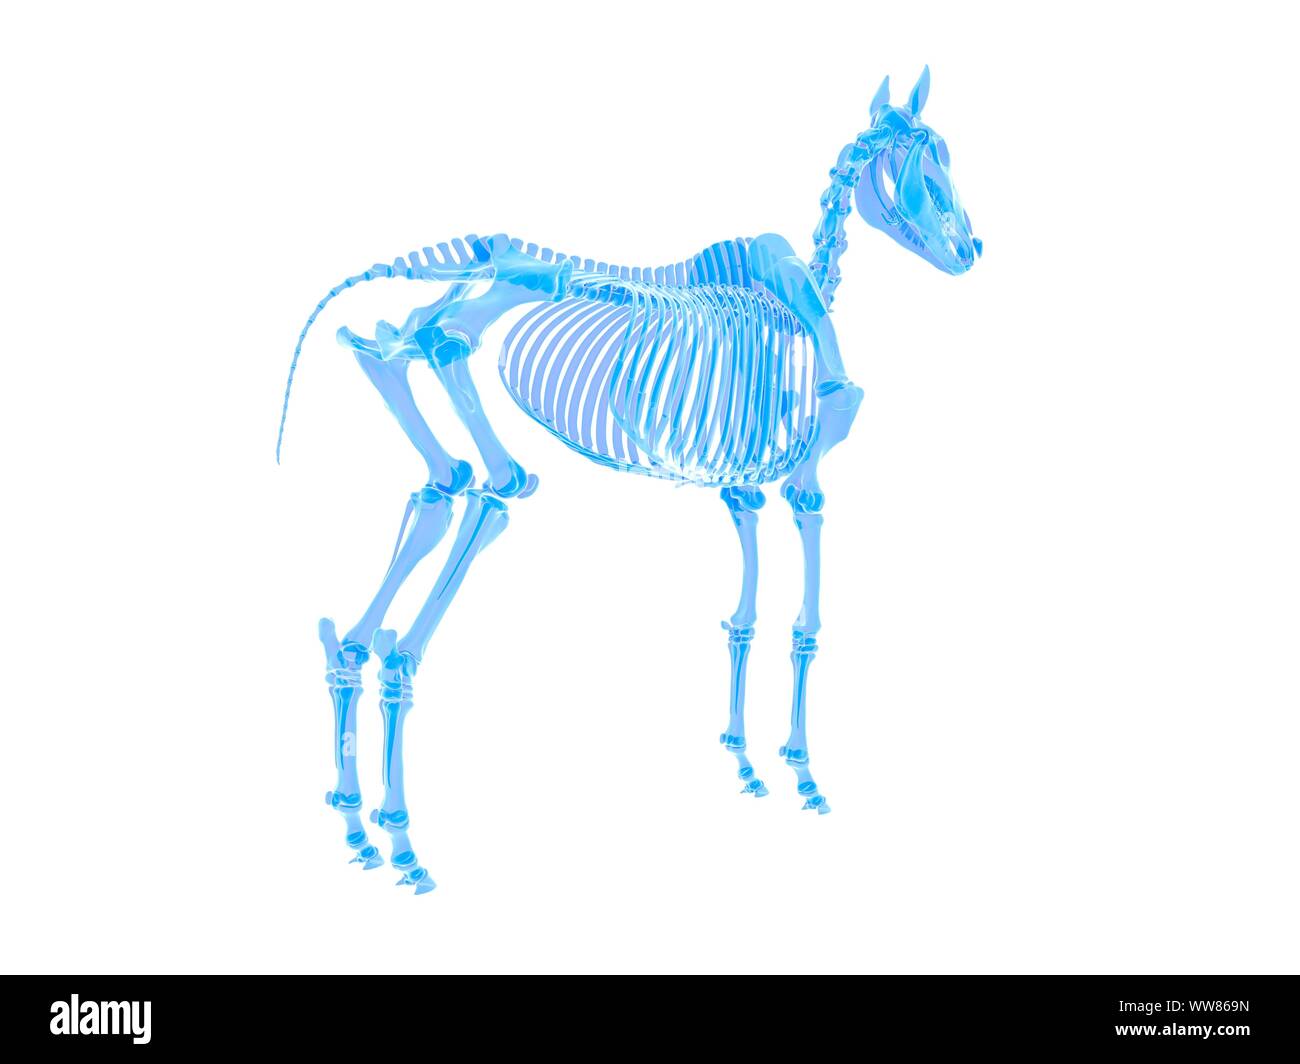 Horse skeleton, illustration Stock Photo